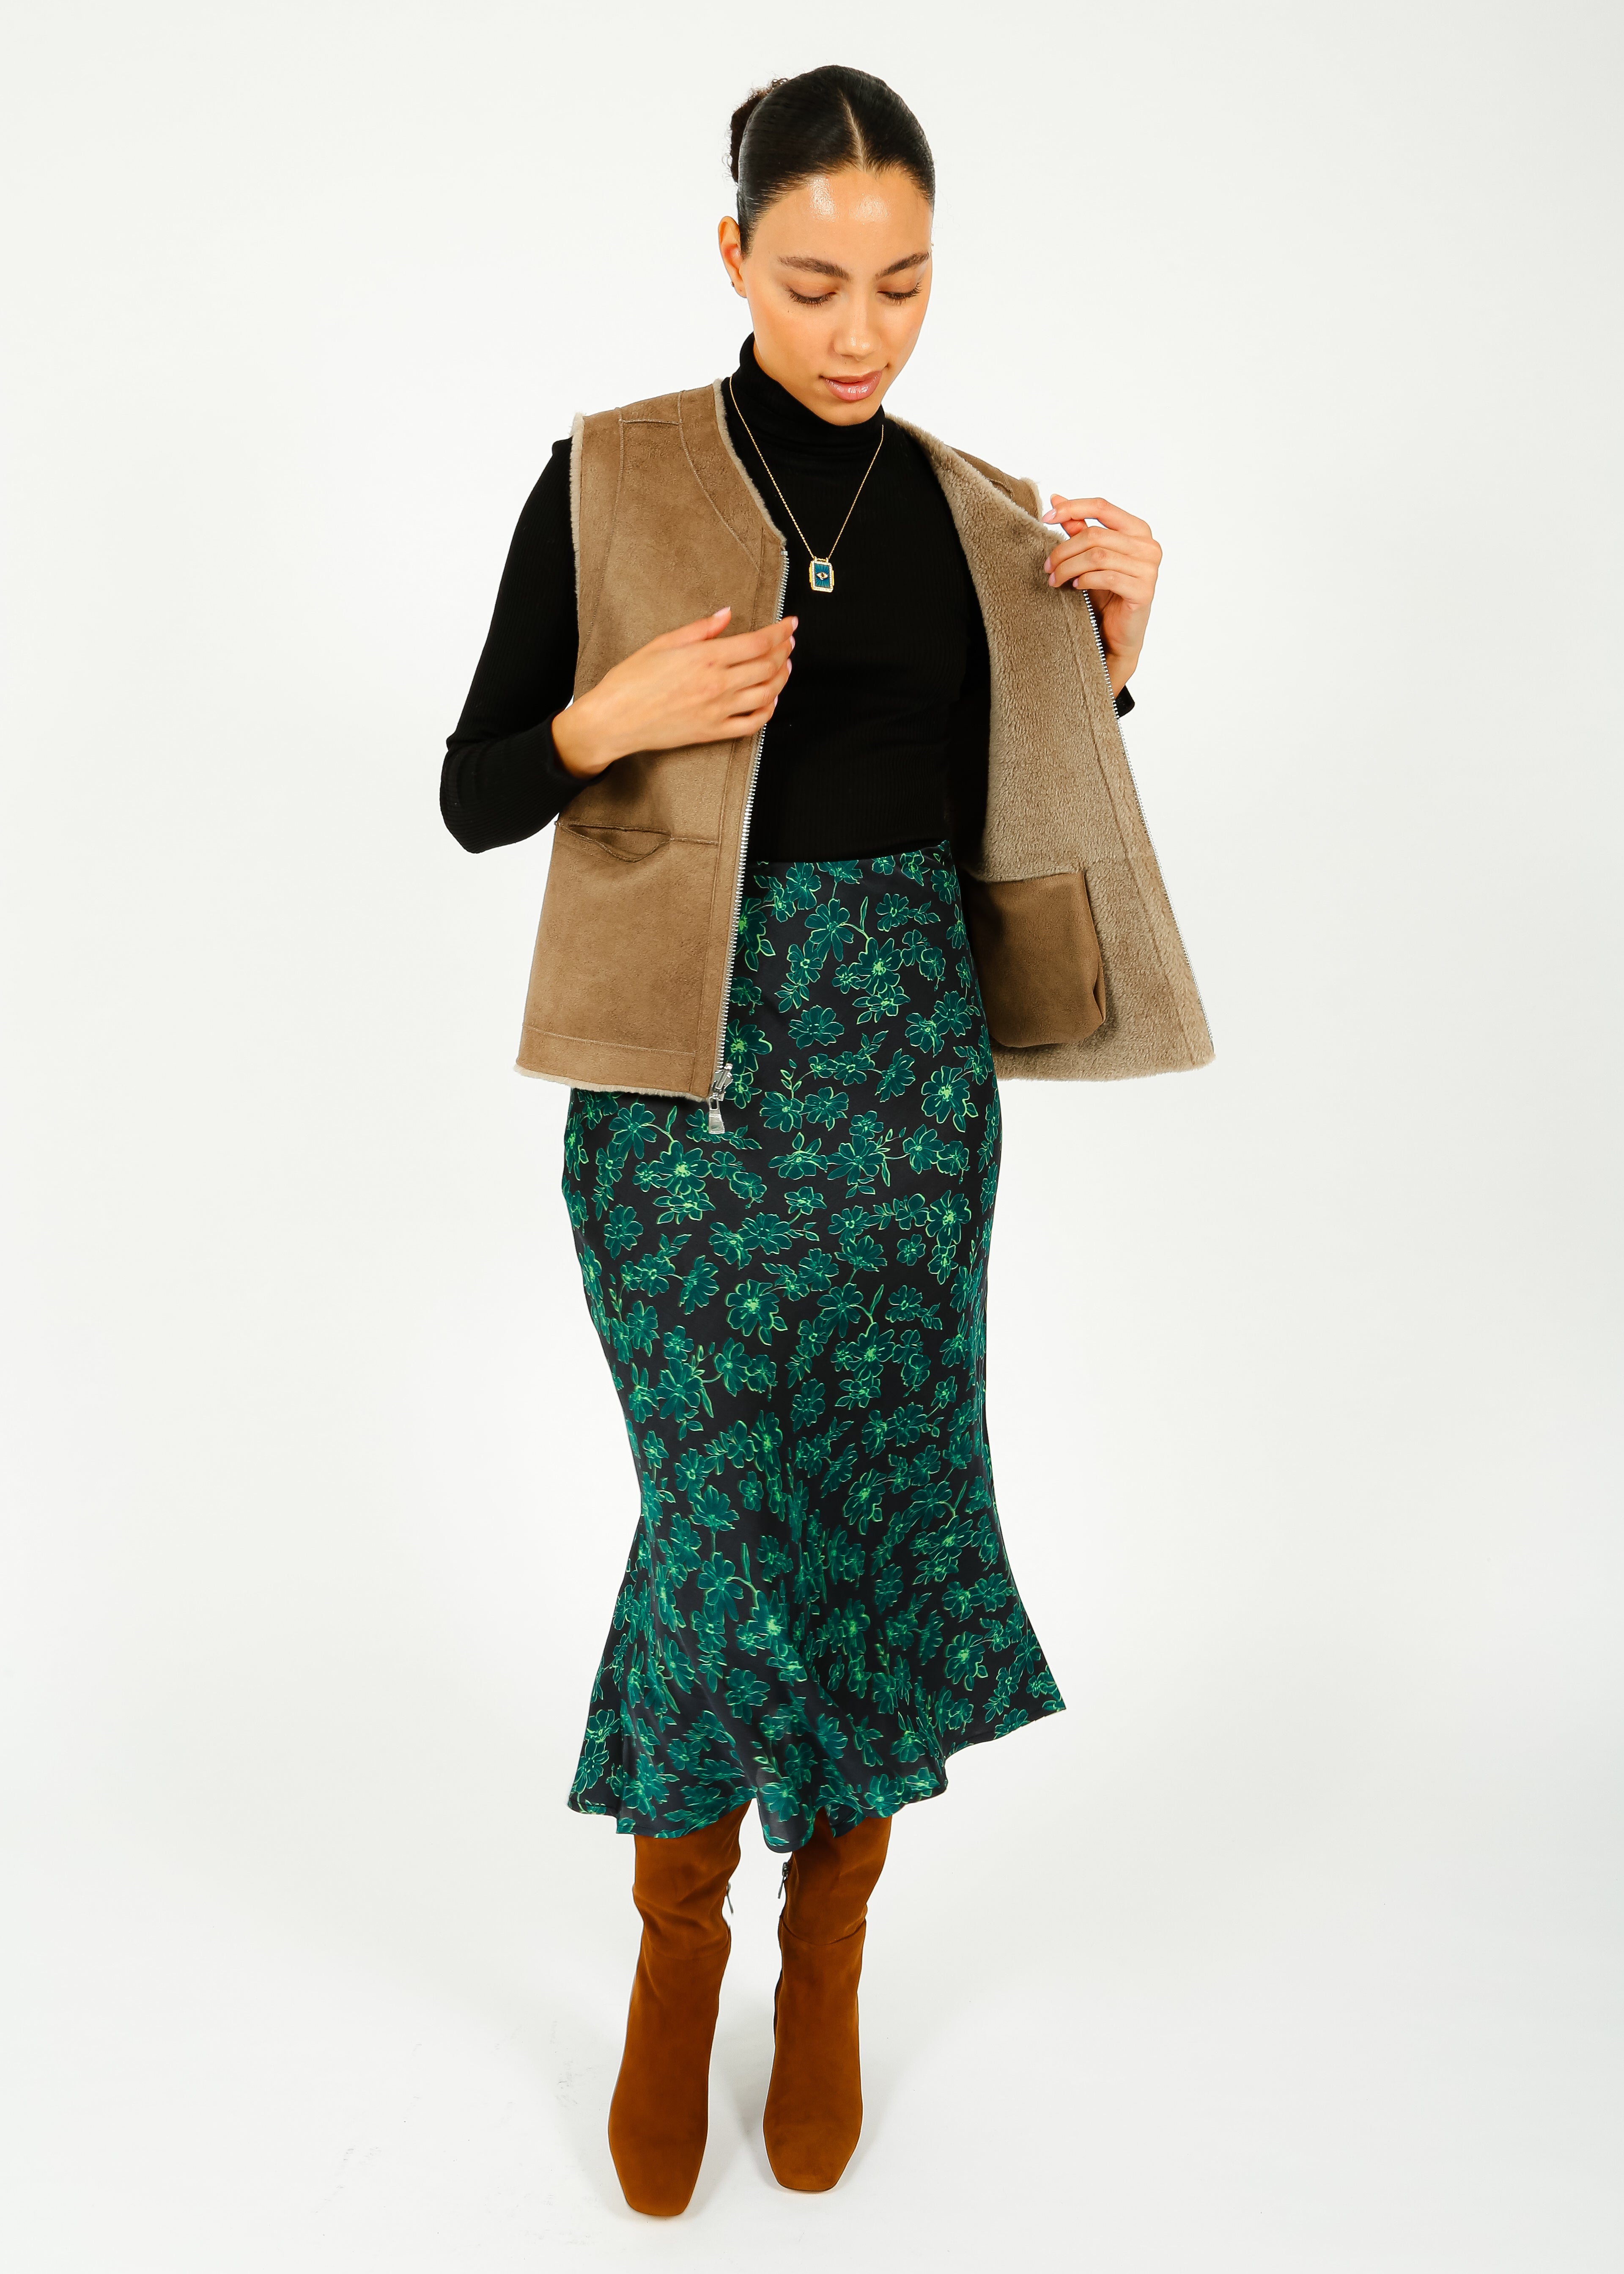 PPL Rea Skirt in Sketch Floral 02 Green